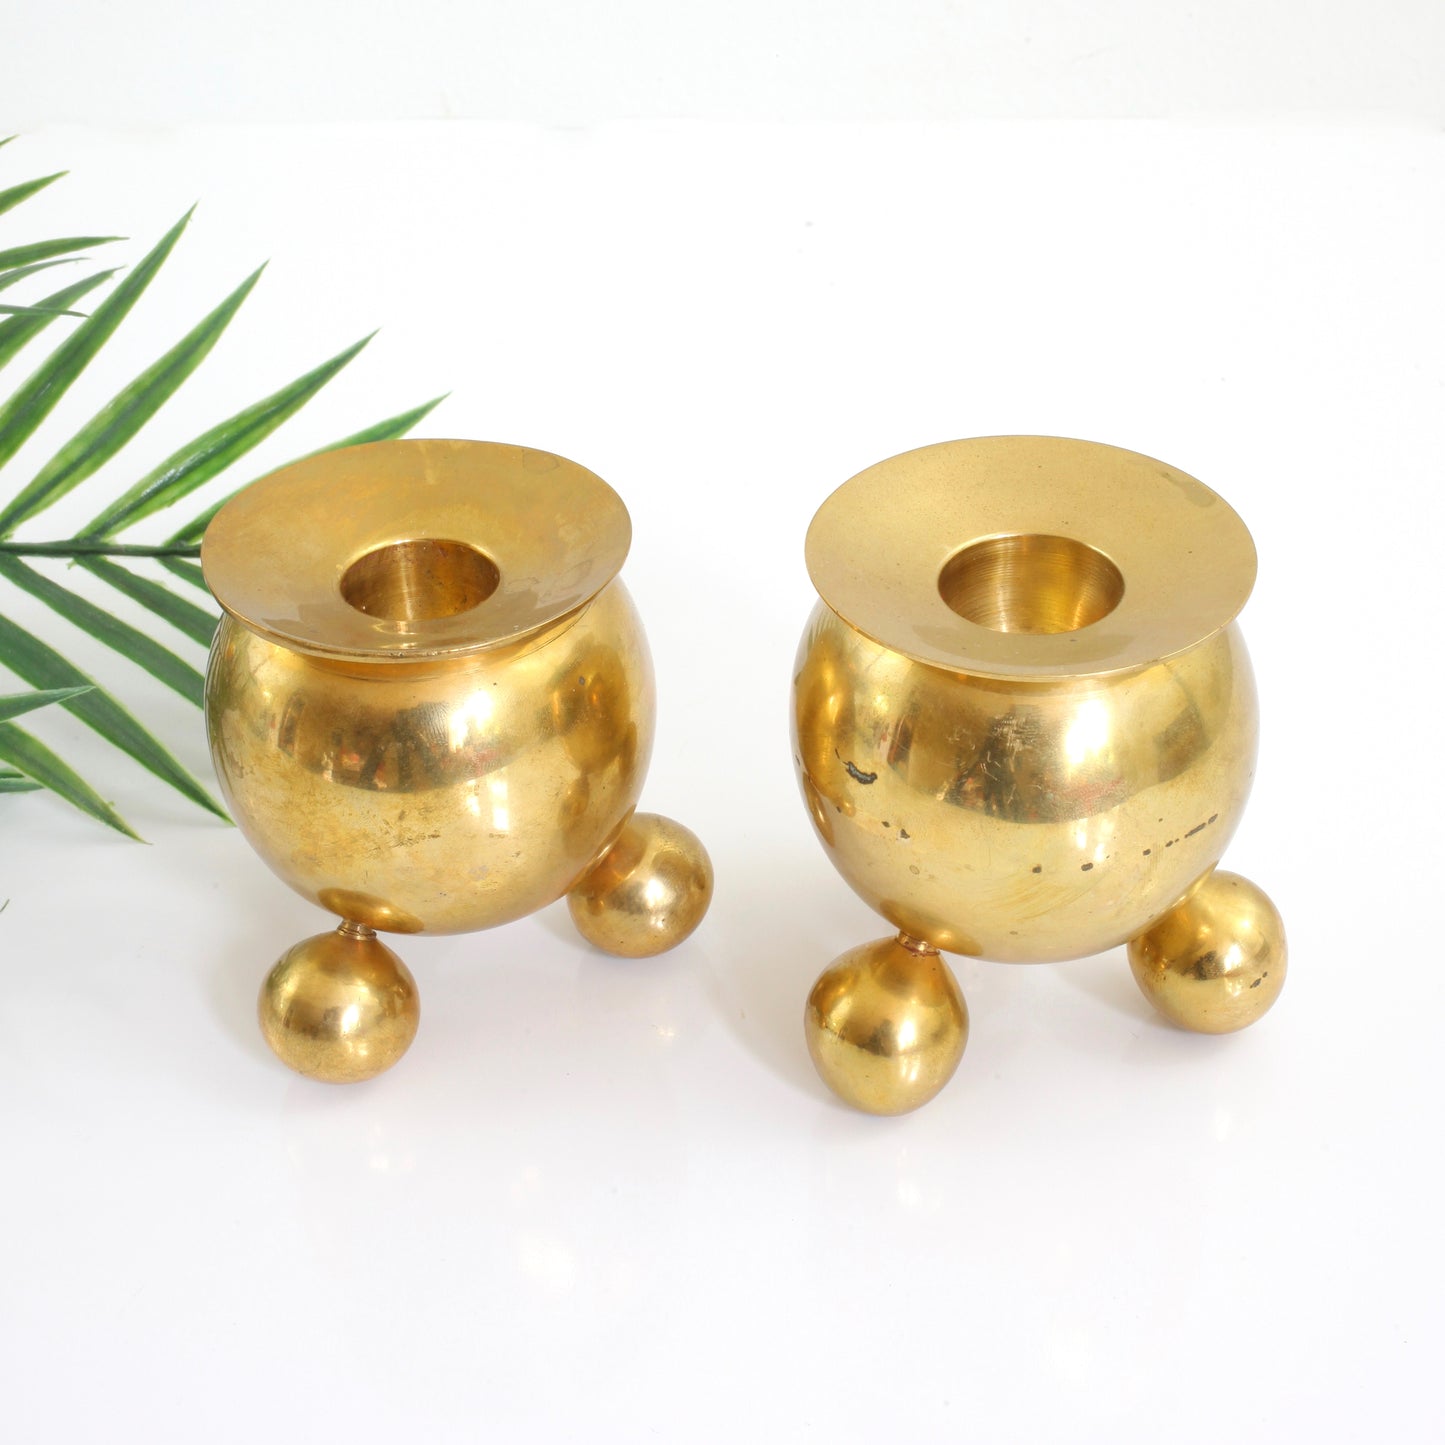 SOLD - Vintage Pair of Bauhaus Brass Sphere Candlesticks